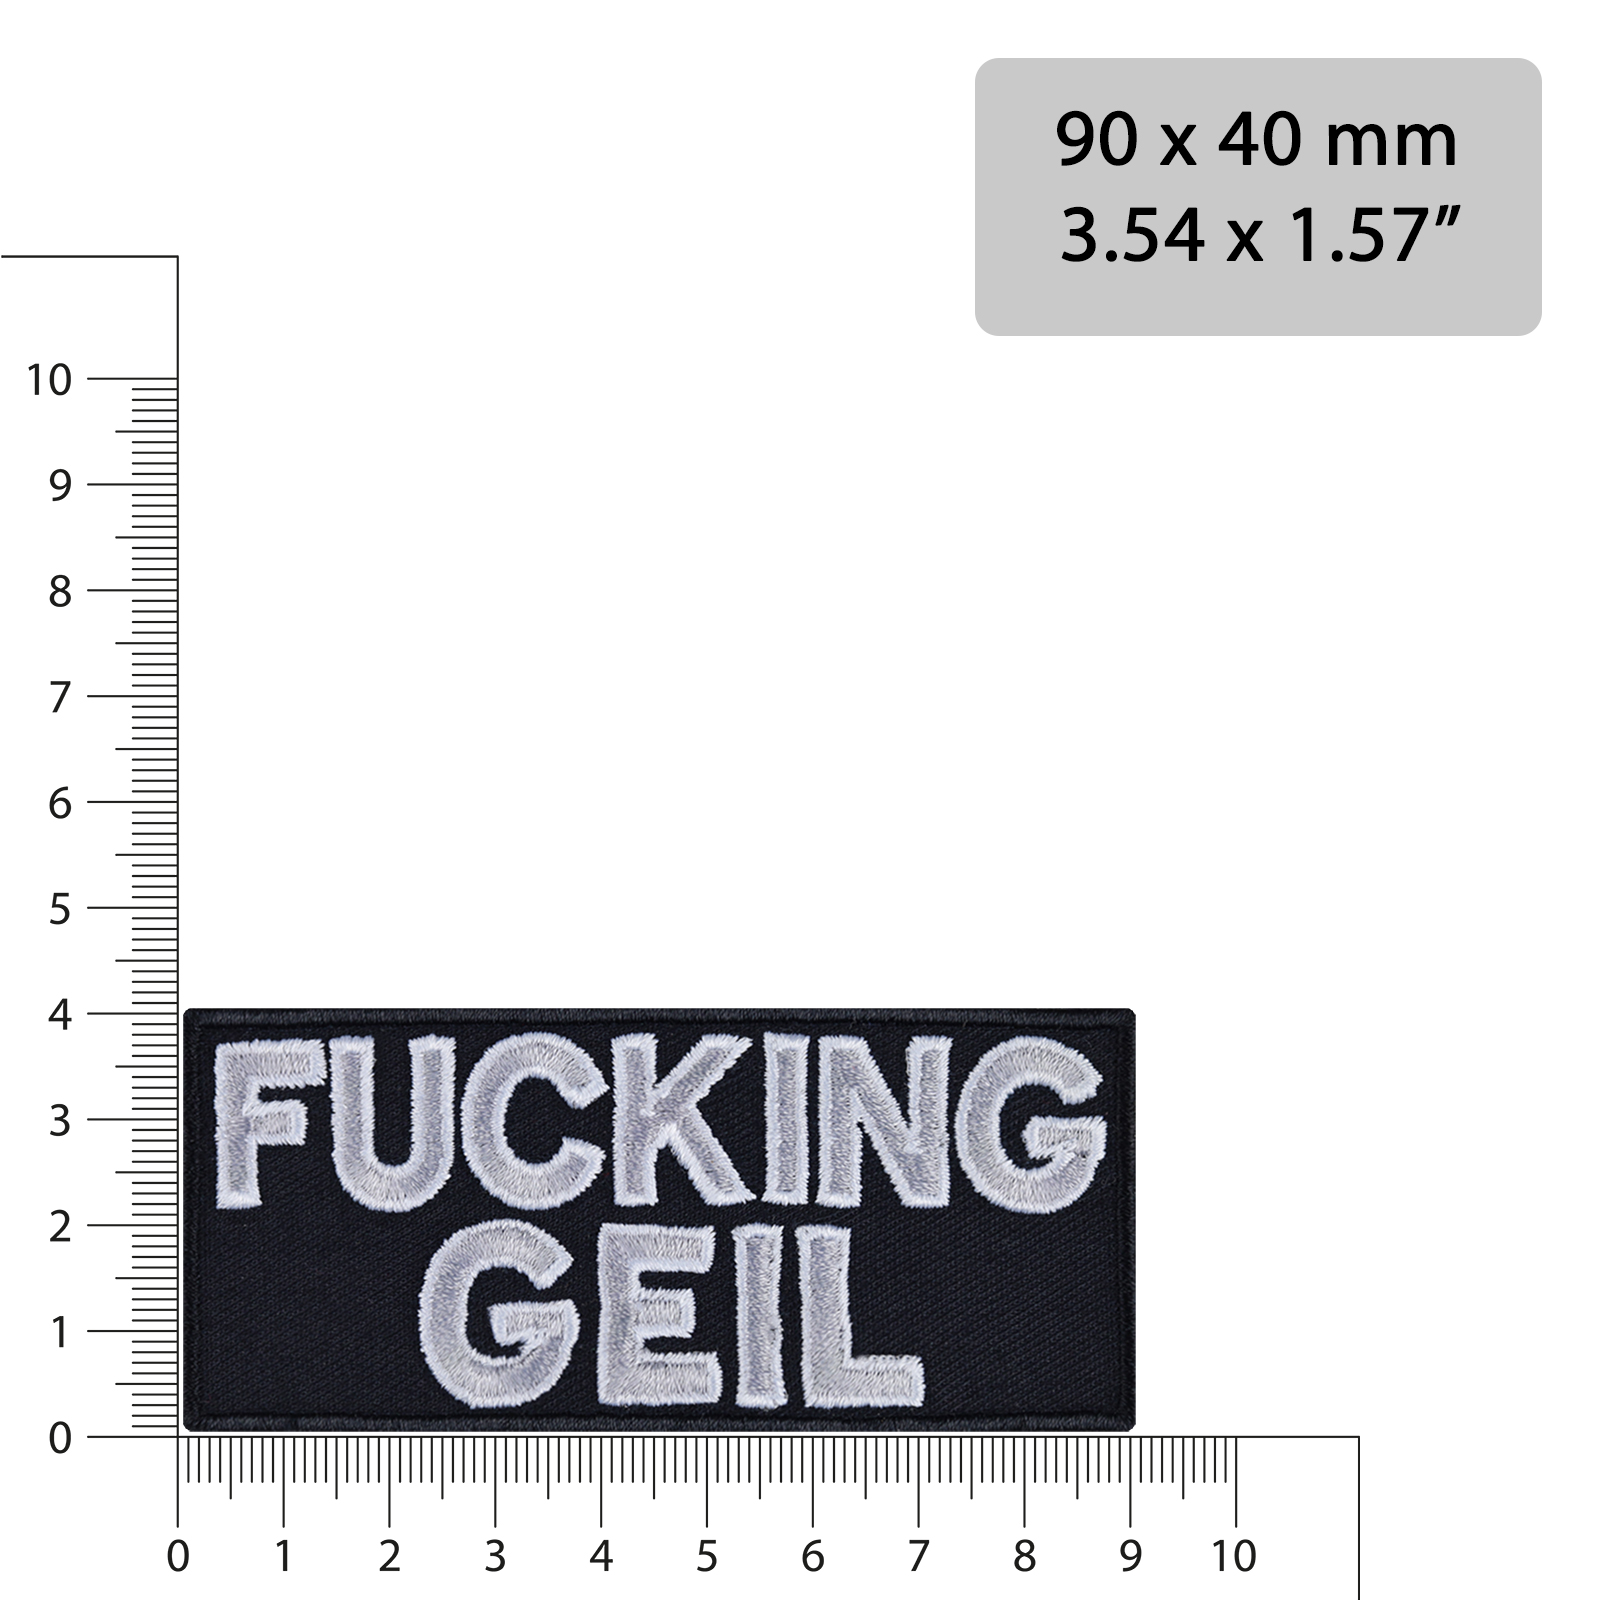 Fucking geil - Patch